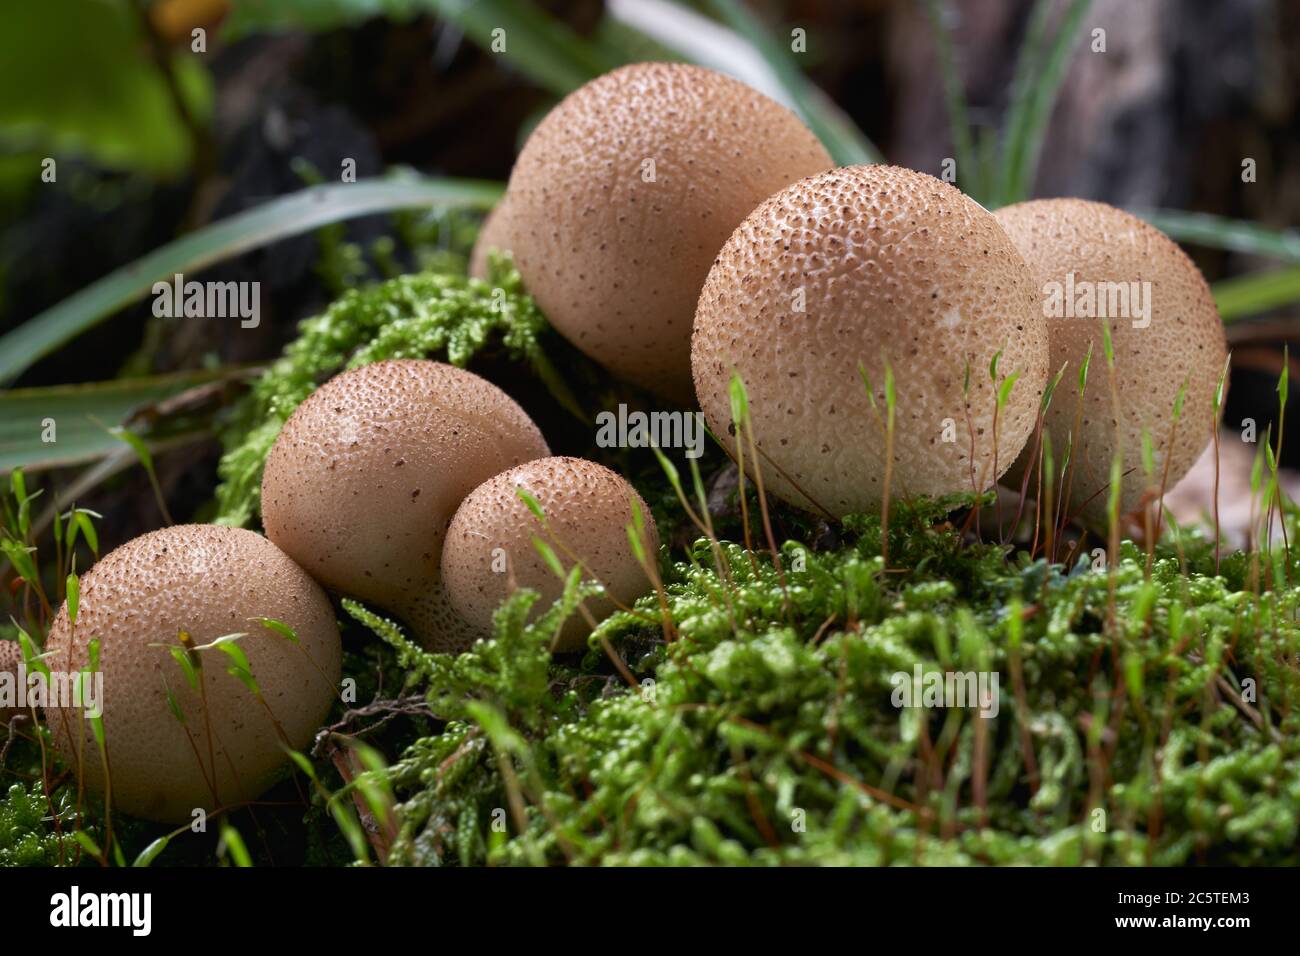 Essbarer Pilz Lycoperdon pyriforme im Buchenwald. Auch bekannt als Birnenförmige Puffball oder Stumpf Puffball. Pilze auf dem Holz. Stockfoto